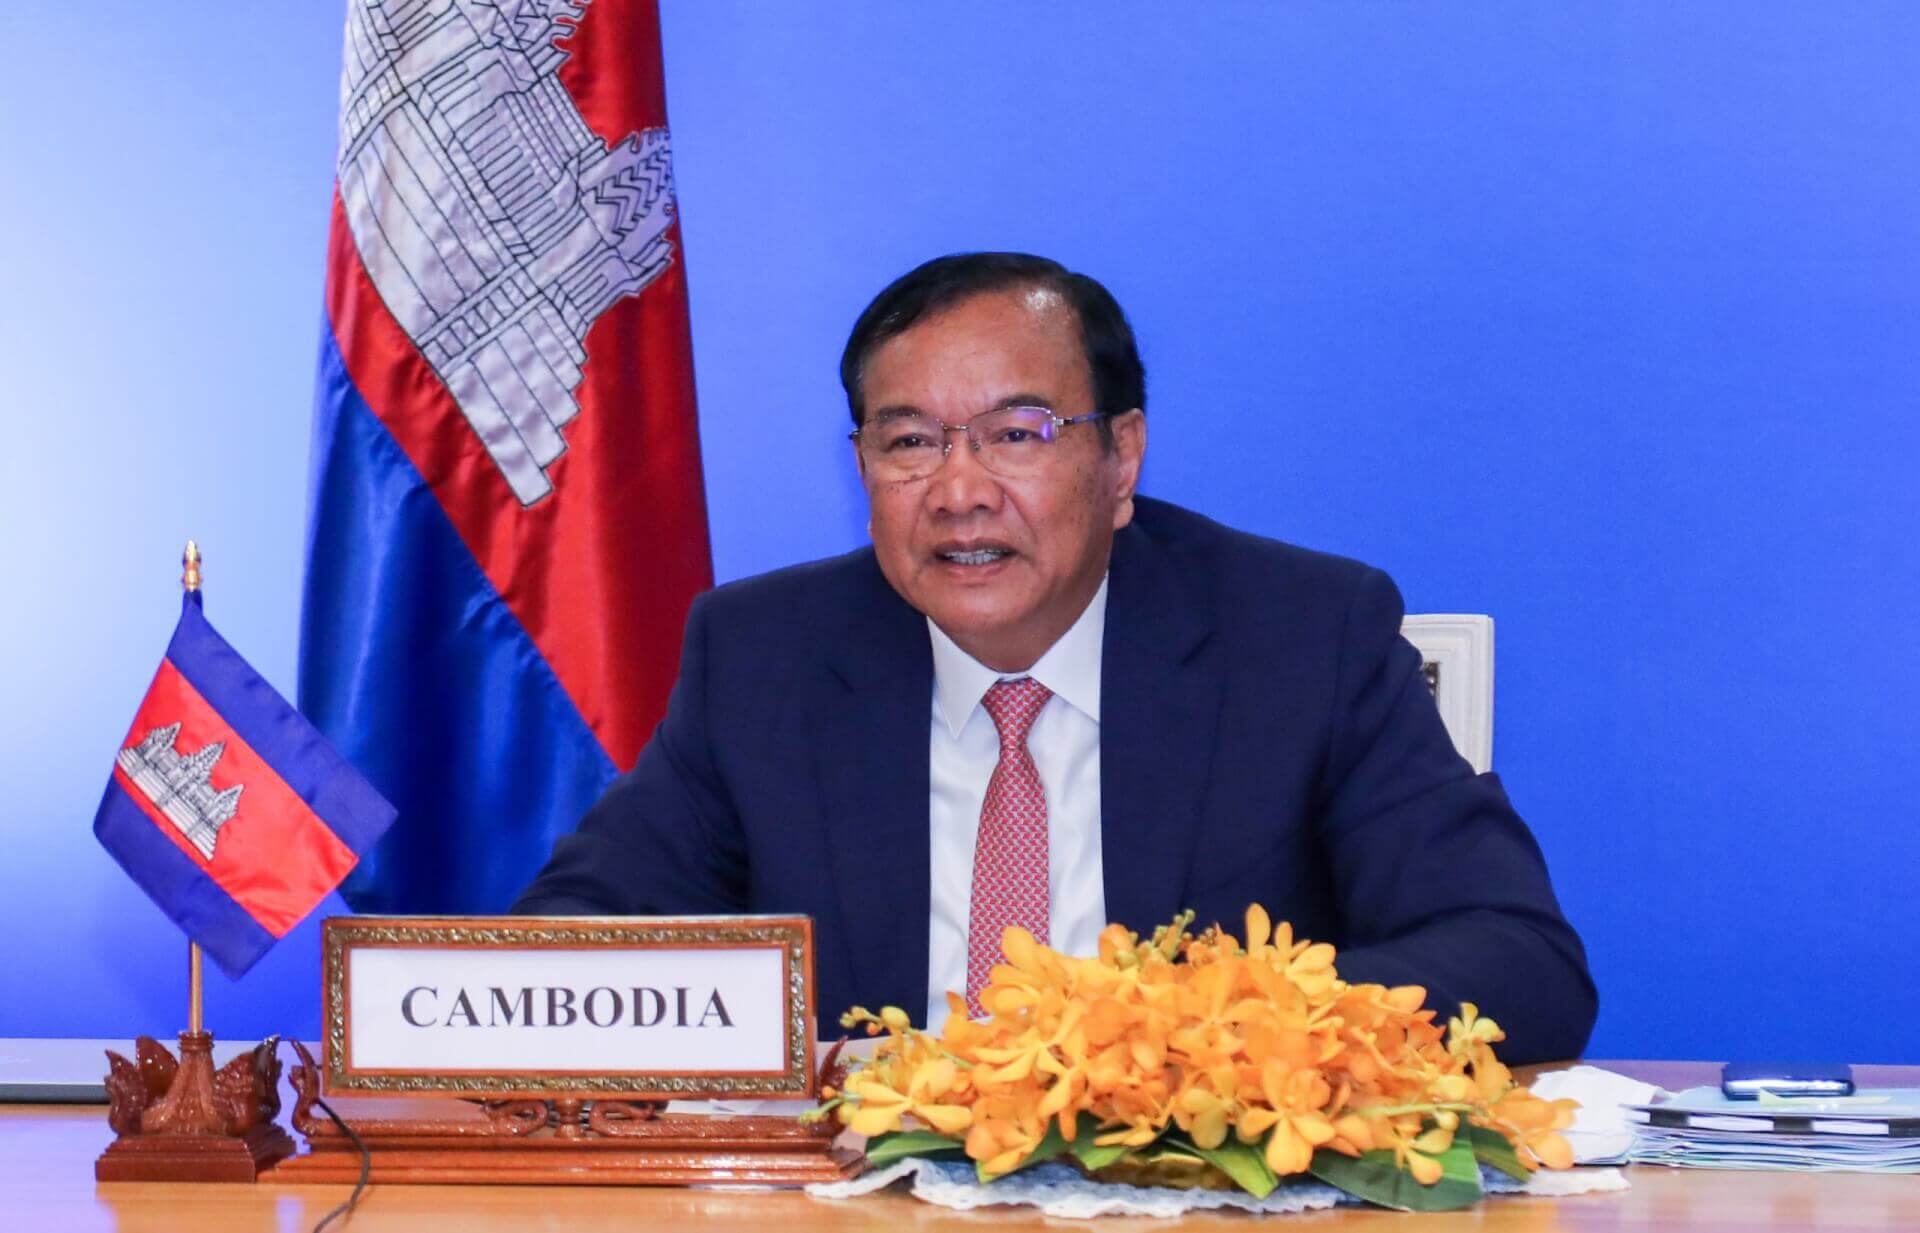 Cambodia: Myanmar Junta Allows ASEAN Envoy to Meet With Suu Kyi Party Members